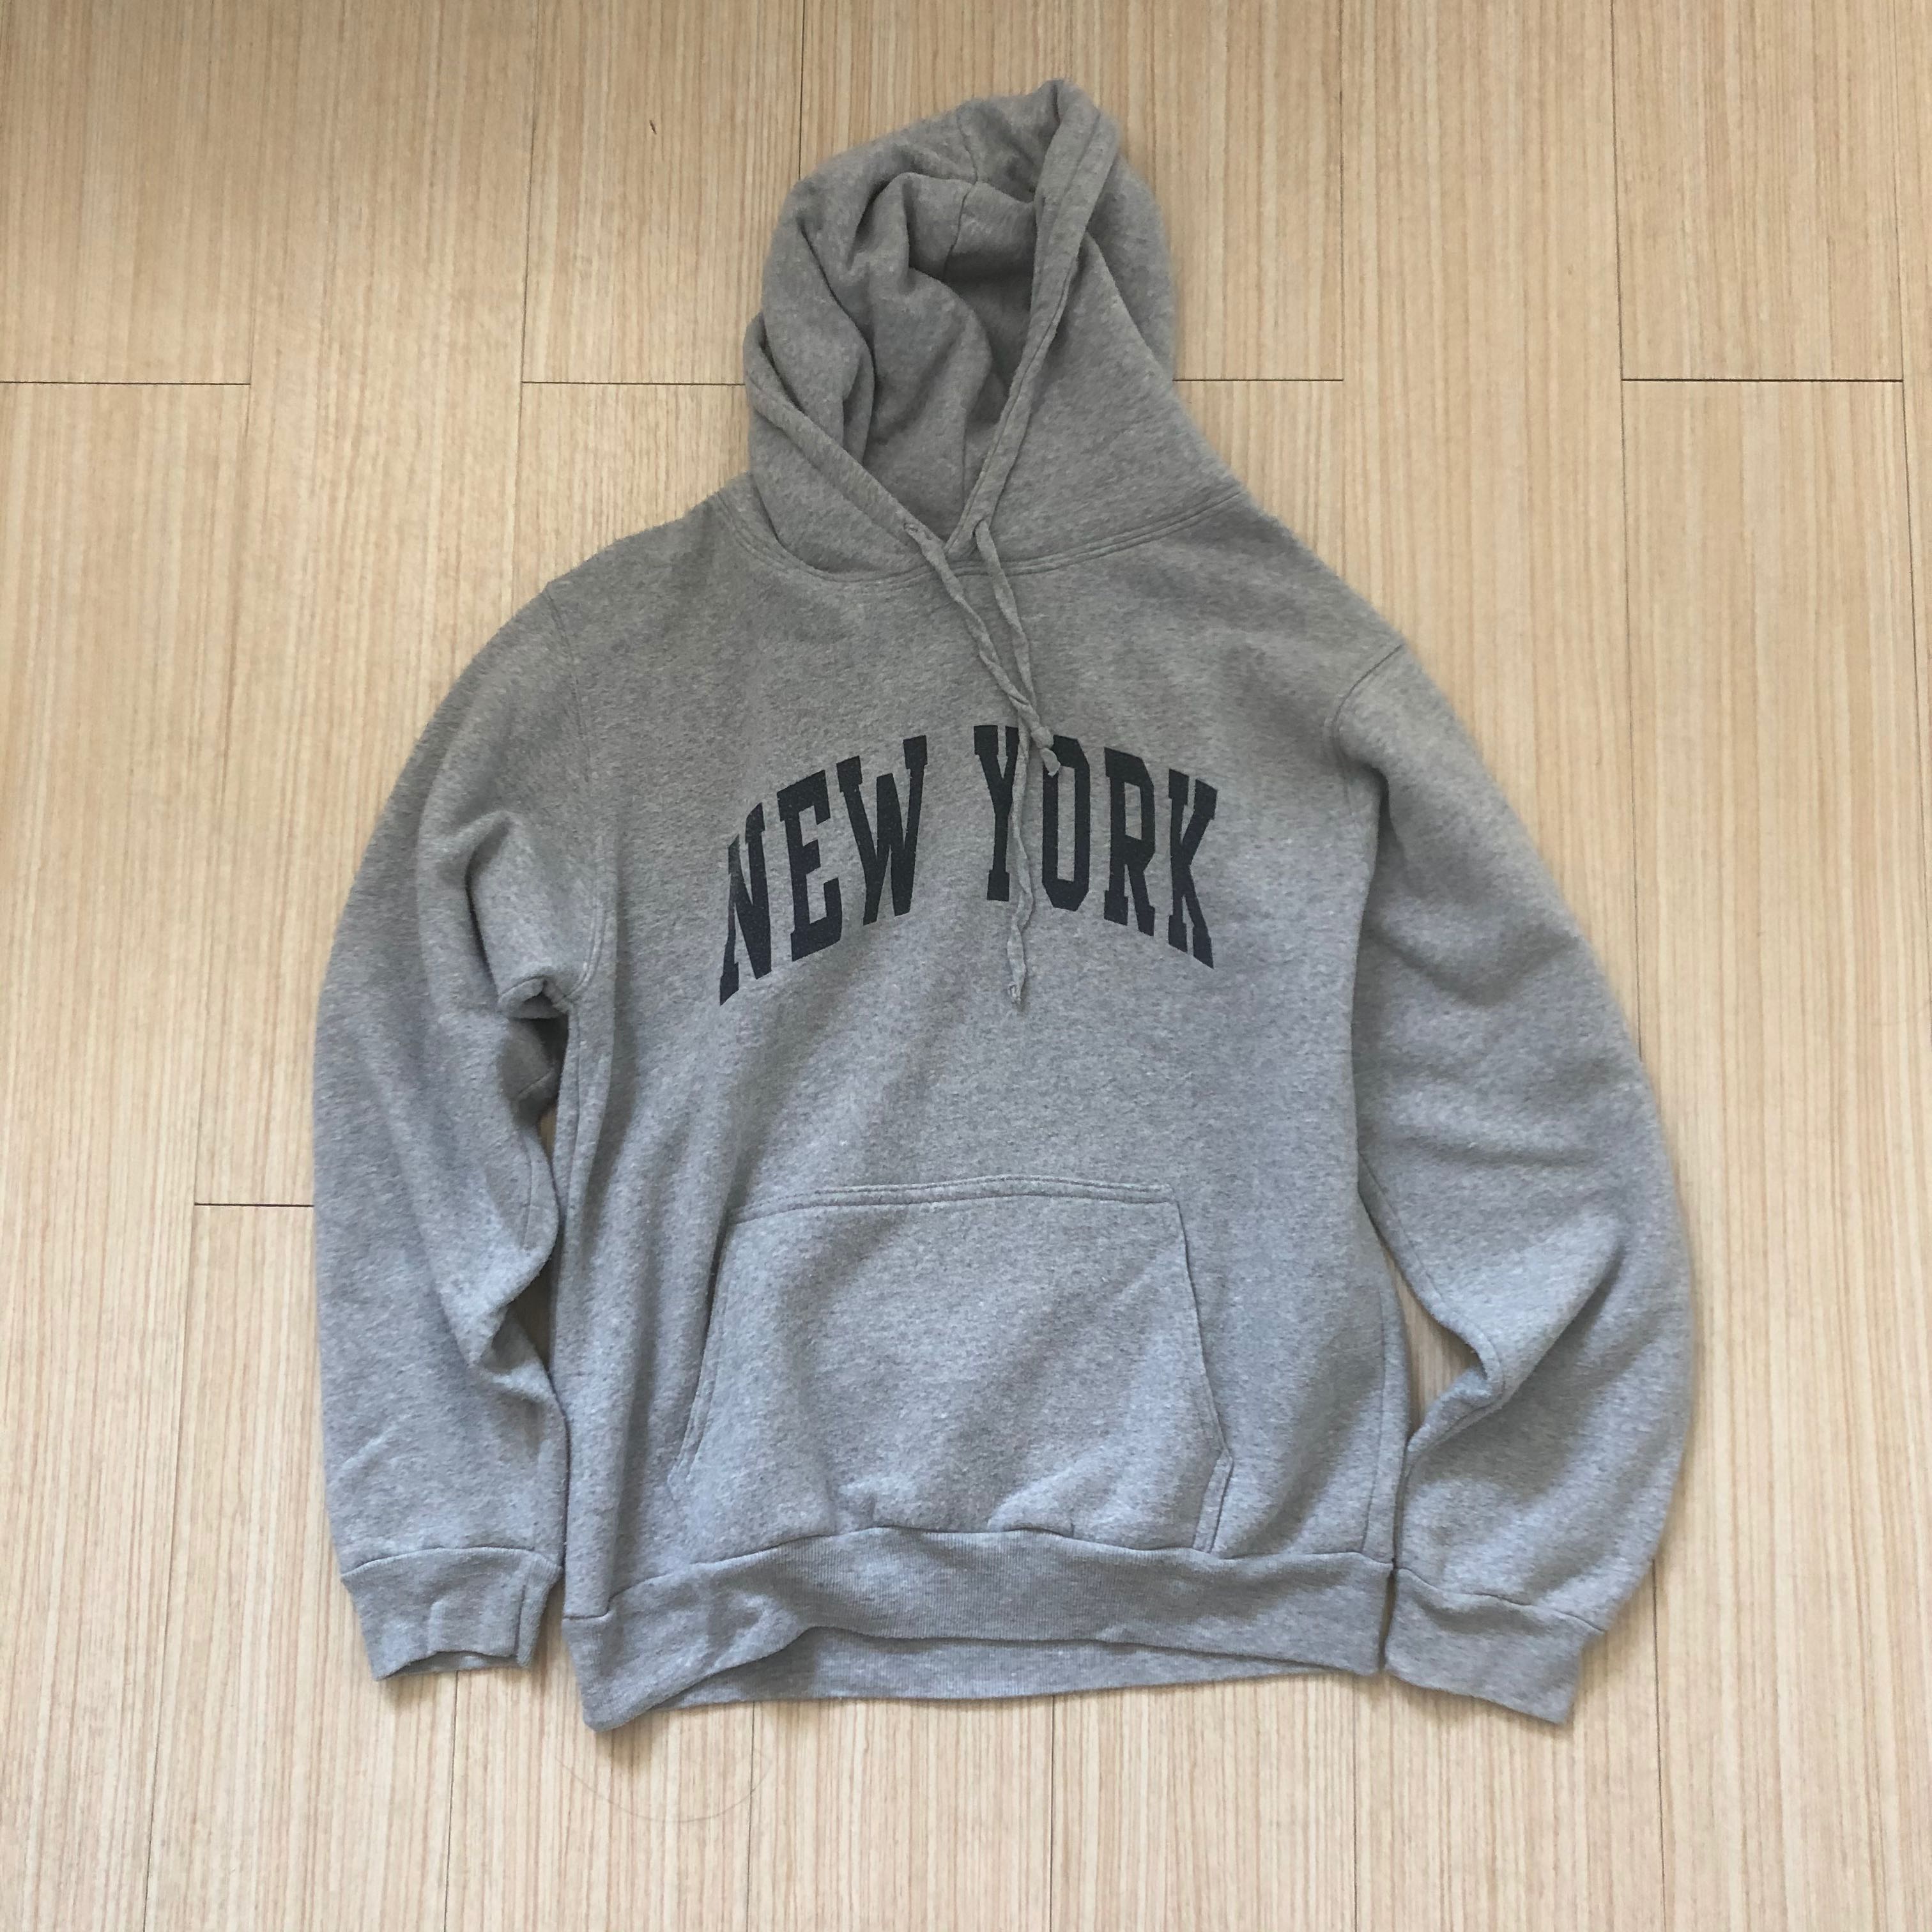 Brandy Melville New York Oversized Hoodie Gray - $38 (15% Off